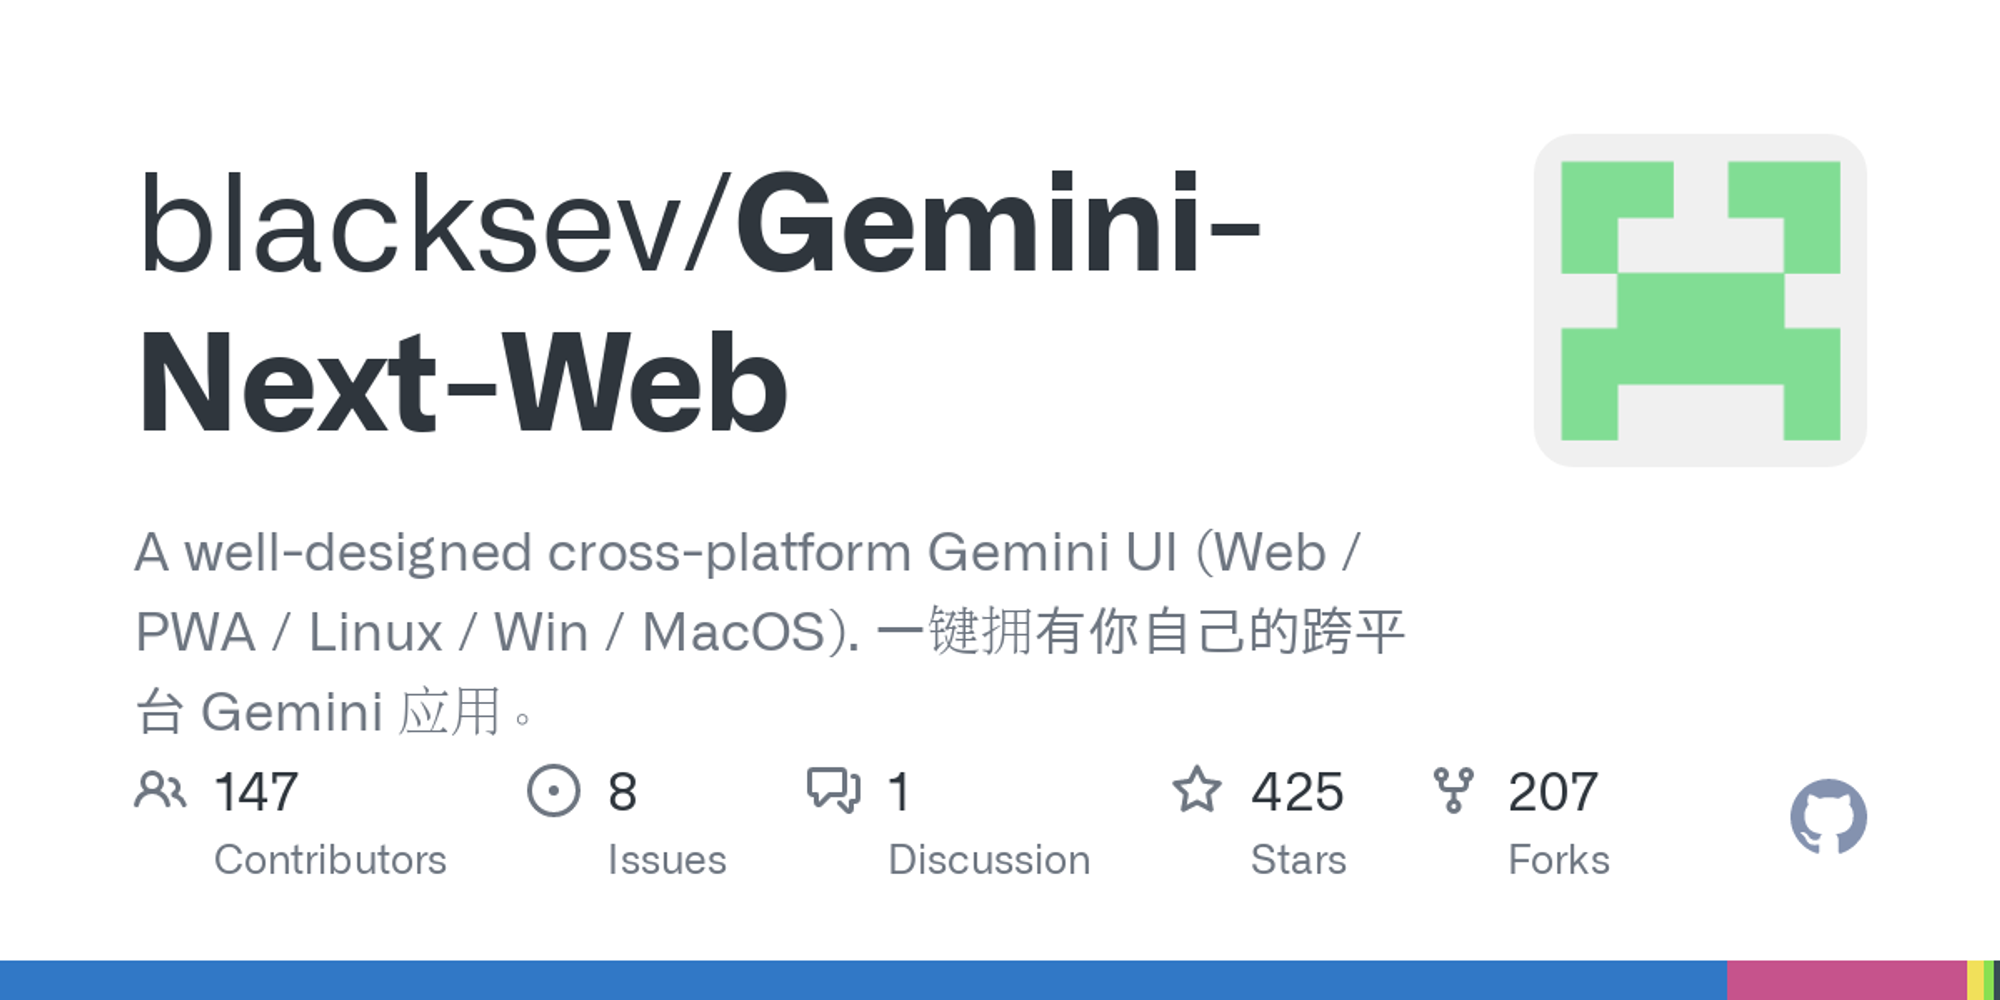 GitHub - blacksev/Gemini-Next-Web: A well-designed cross-platform Gemini UI (Web / PWA / Linux / Win / MacOS). 一键拥有你自己的跨平台 Gemini 应用。